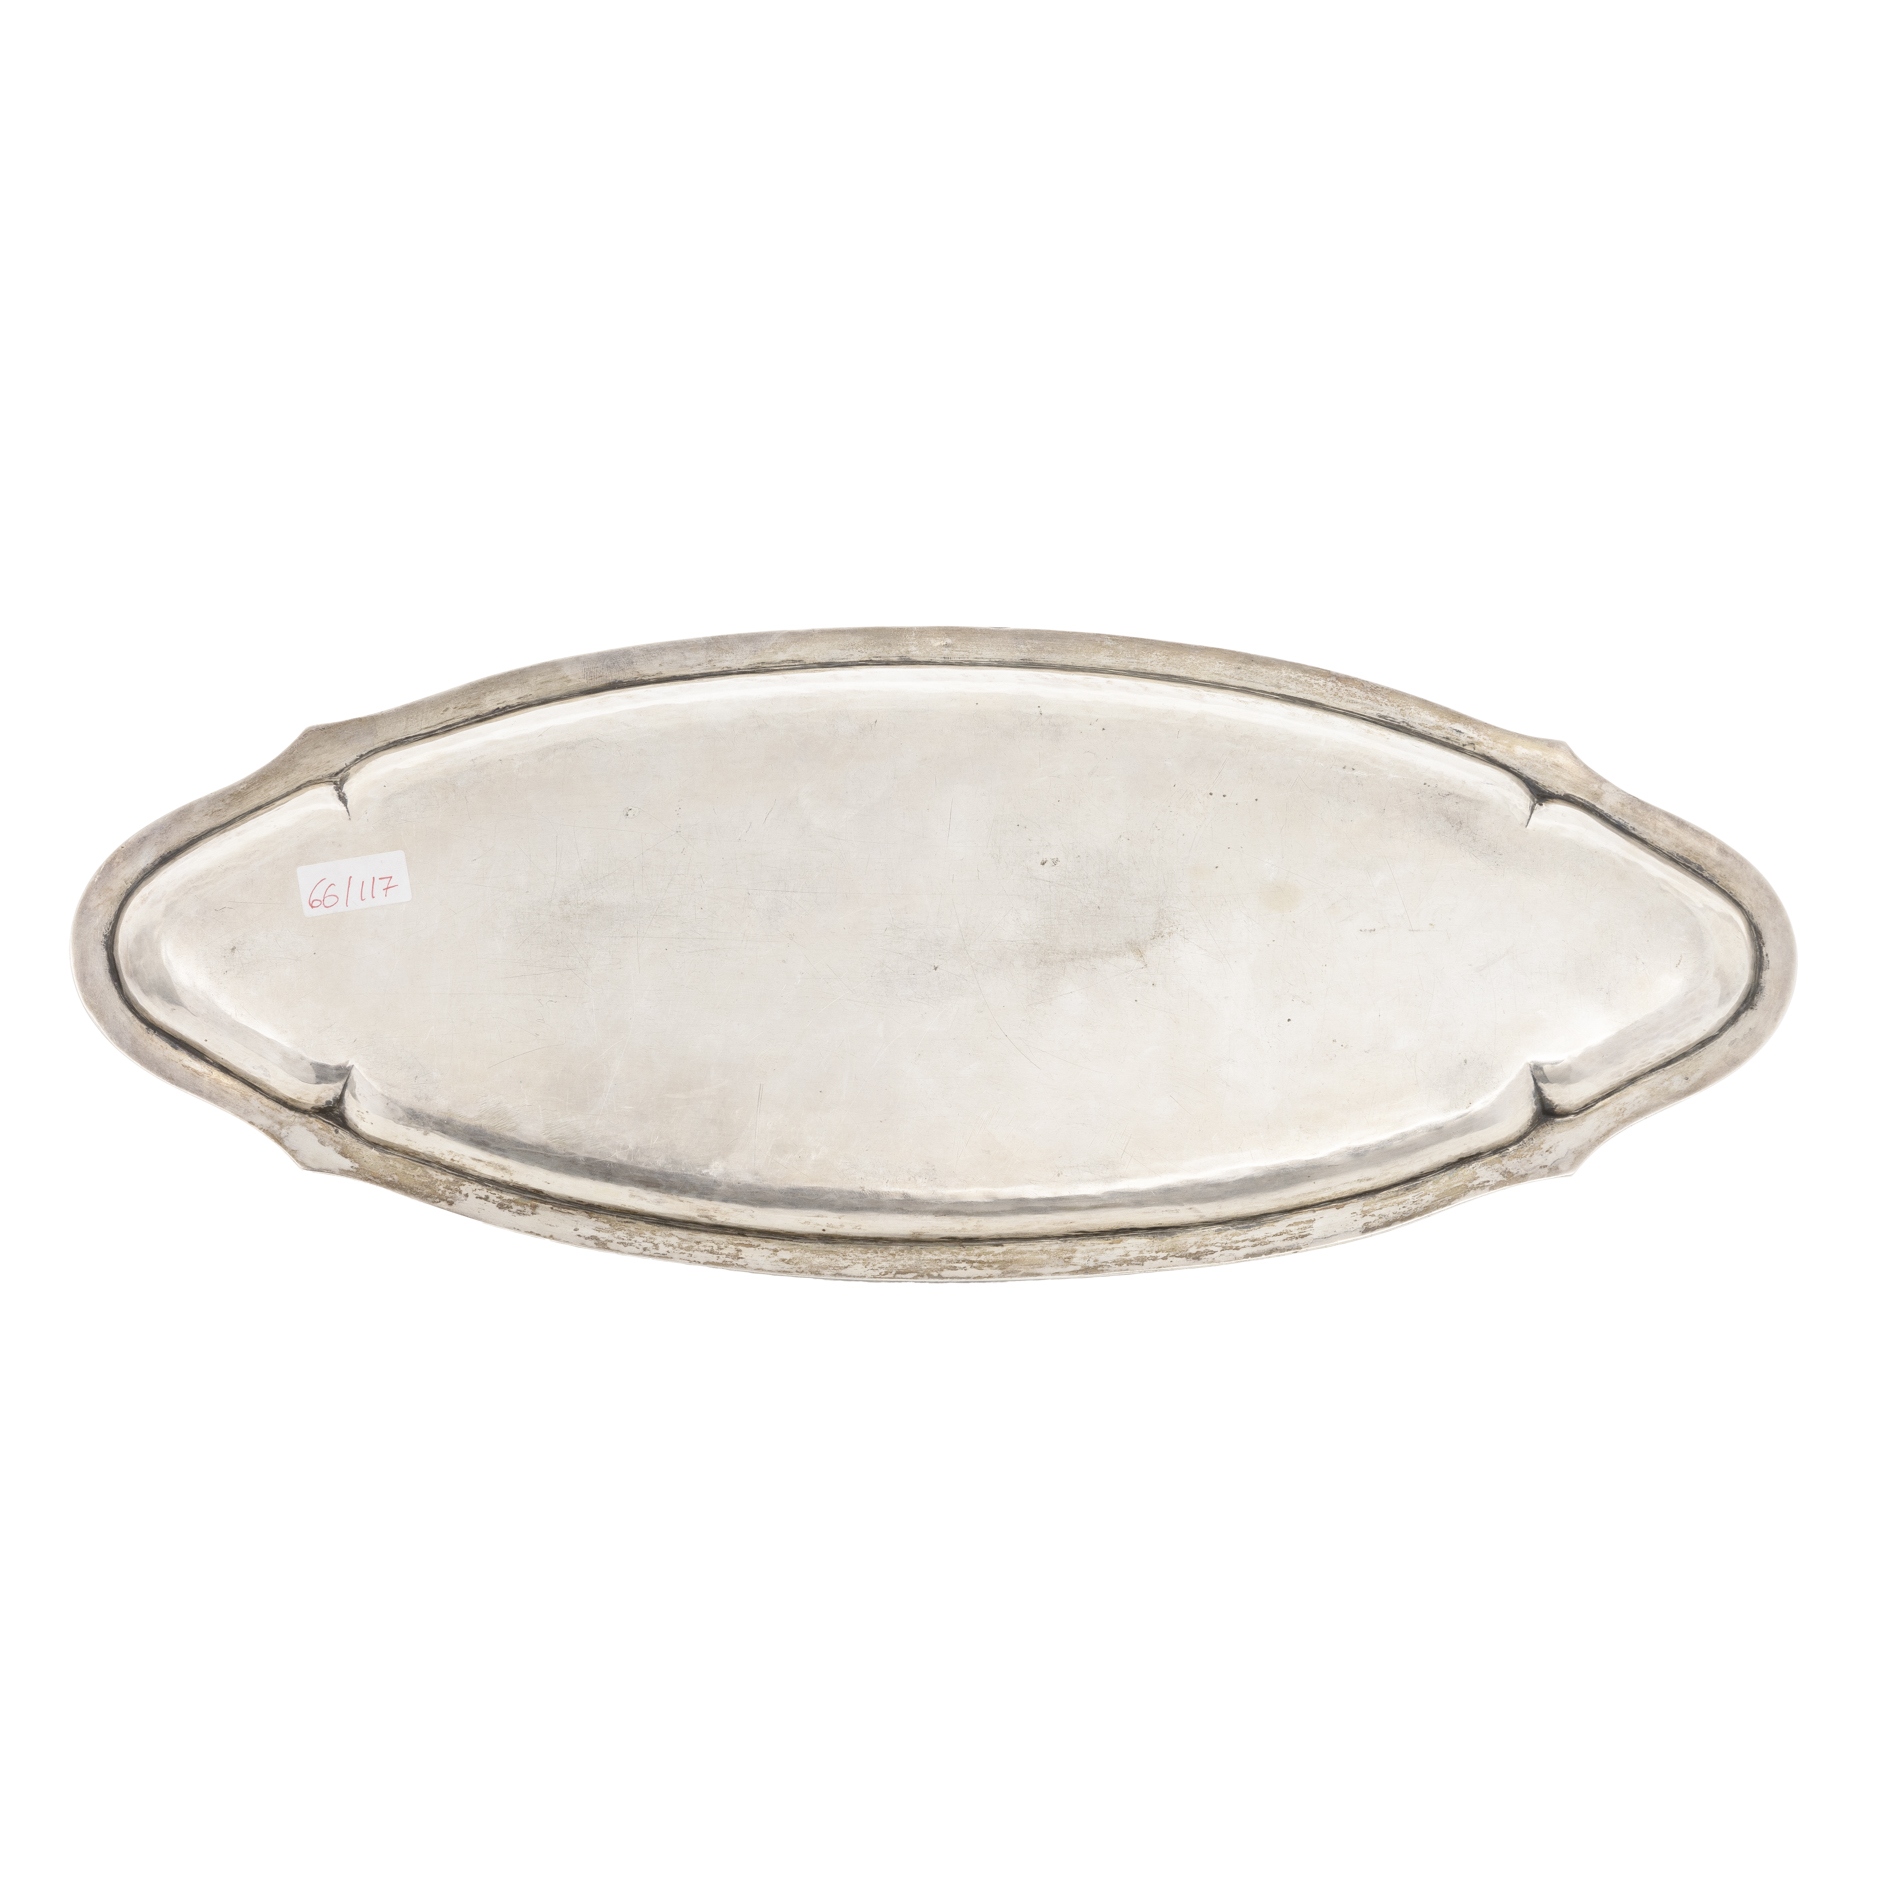 Ovale Silberschale - Image 3 of 3